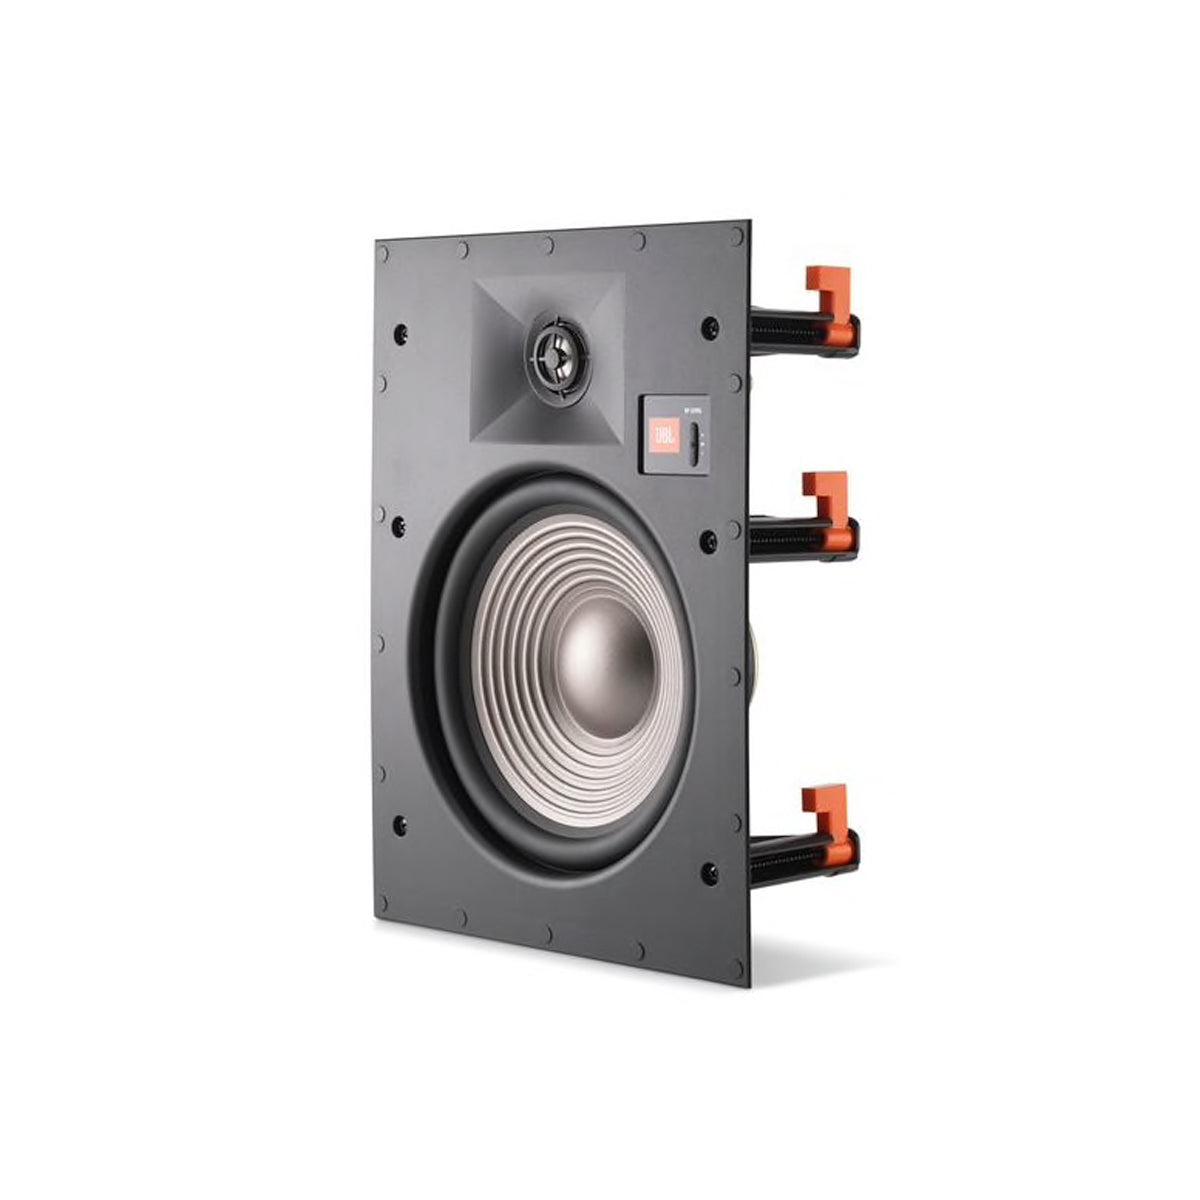 JBL studio 2 8w in wall speaker - Audio Influence Australia 